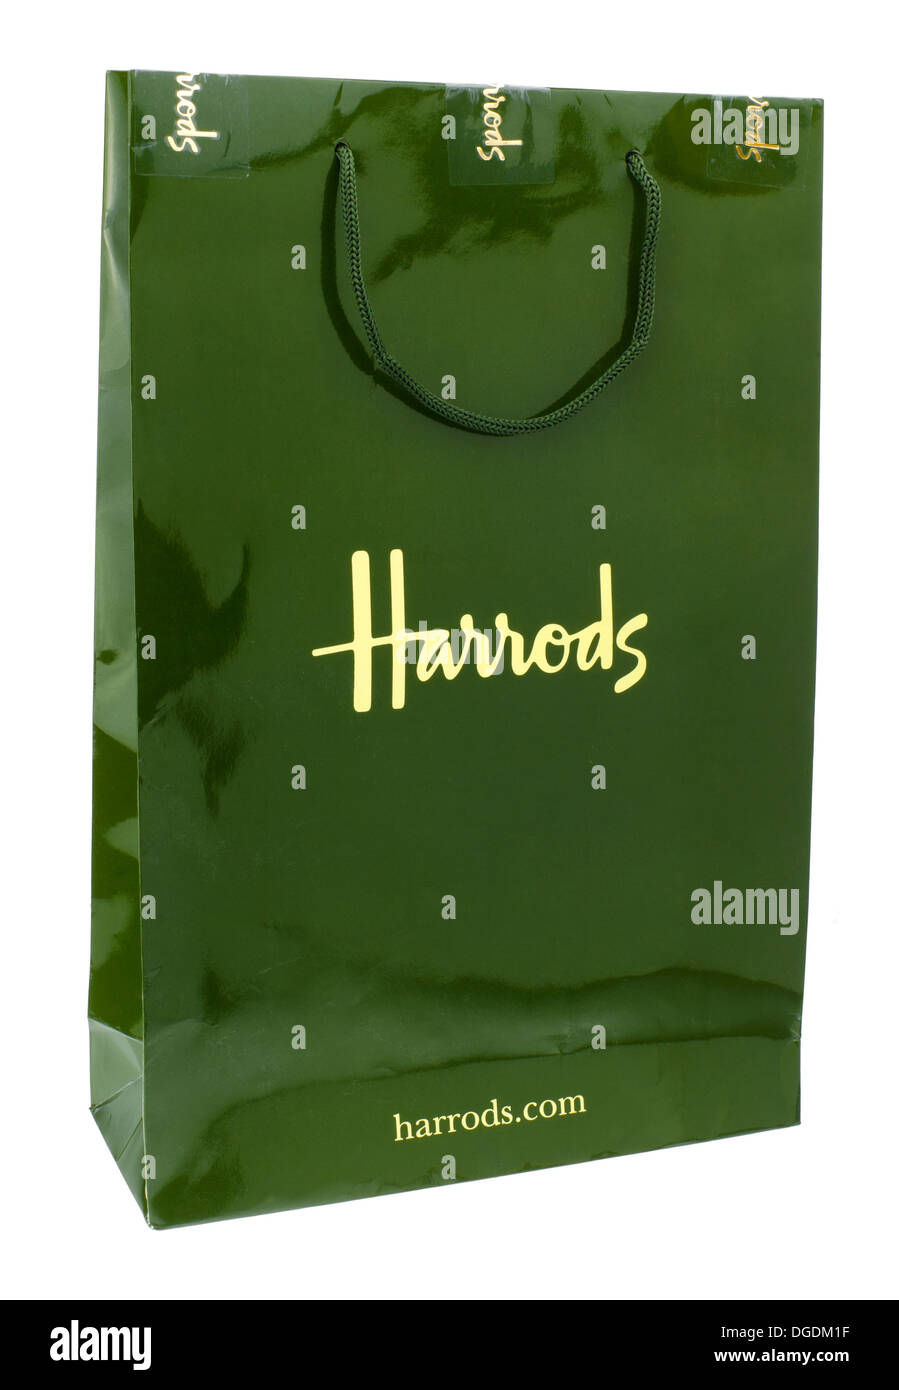 Harrods Carrier Bag, Harrods is a luxury department store in Knightsbridge, London,  It was founded in 1849 Stock Photo